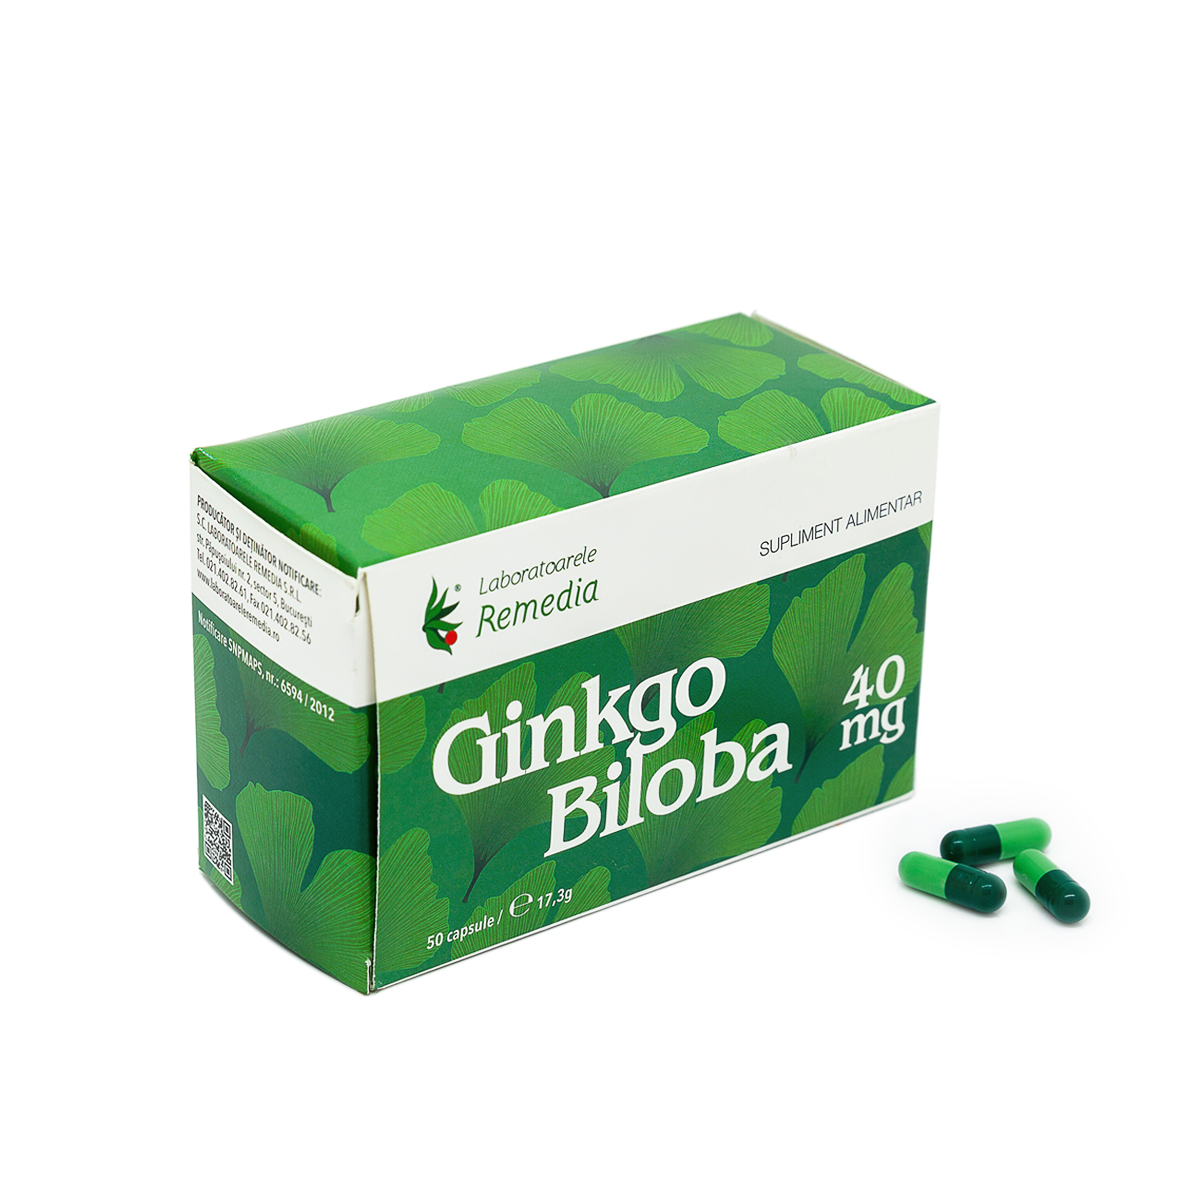 Ginkgo Biloba 40mg, 50 capsule, Remedia